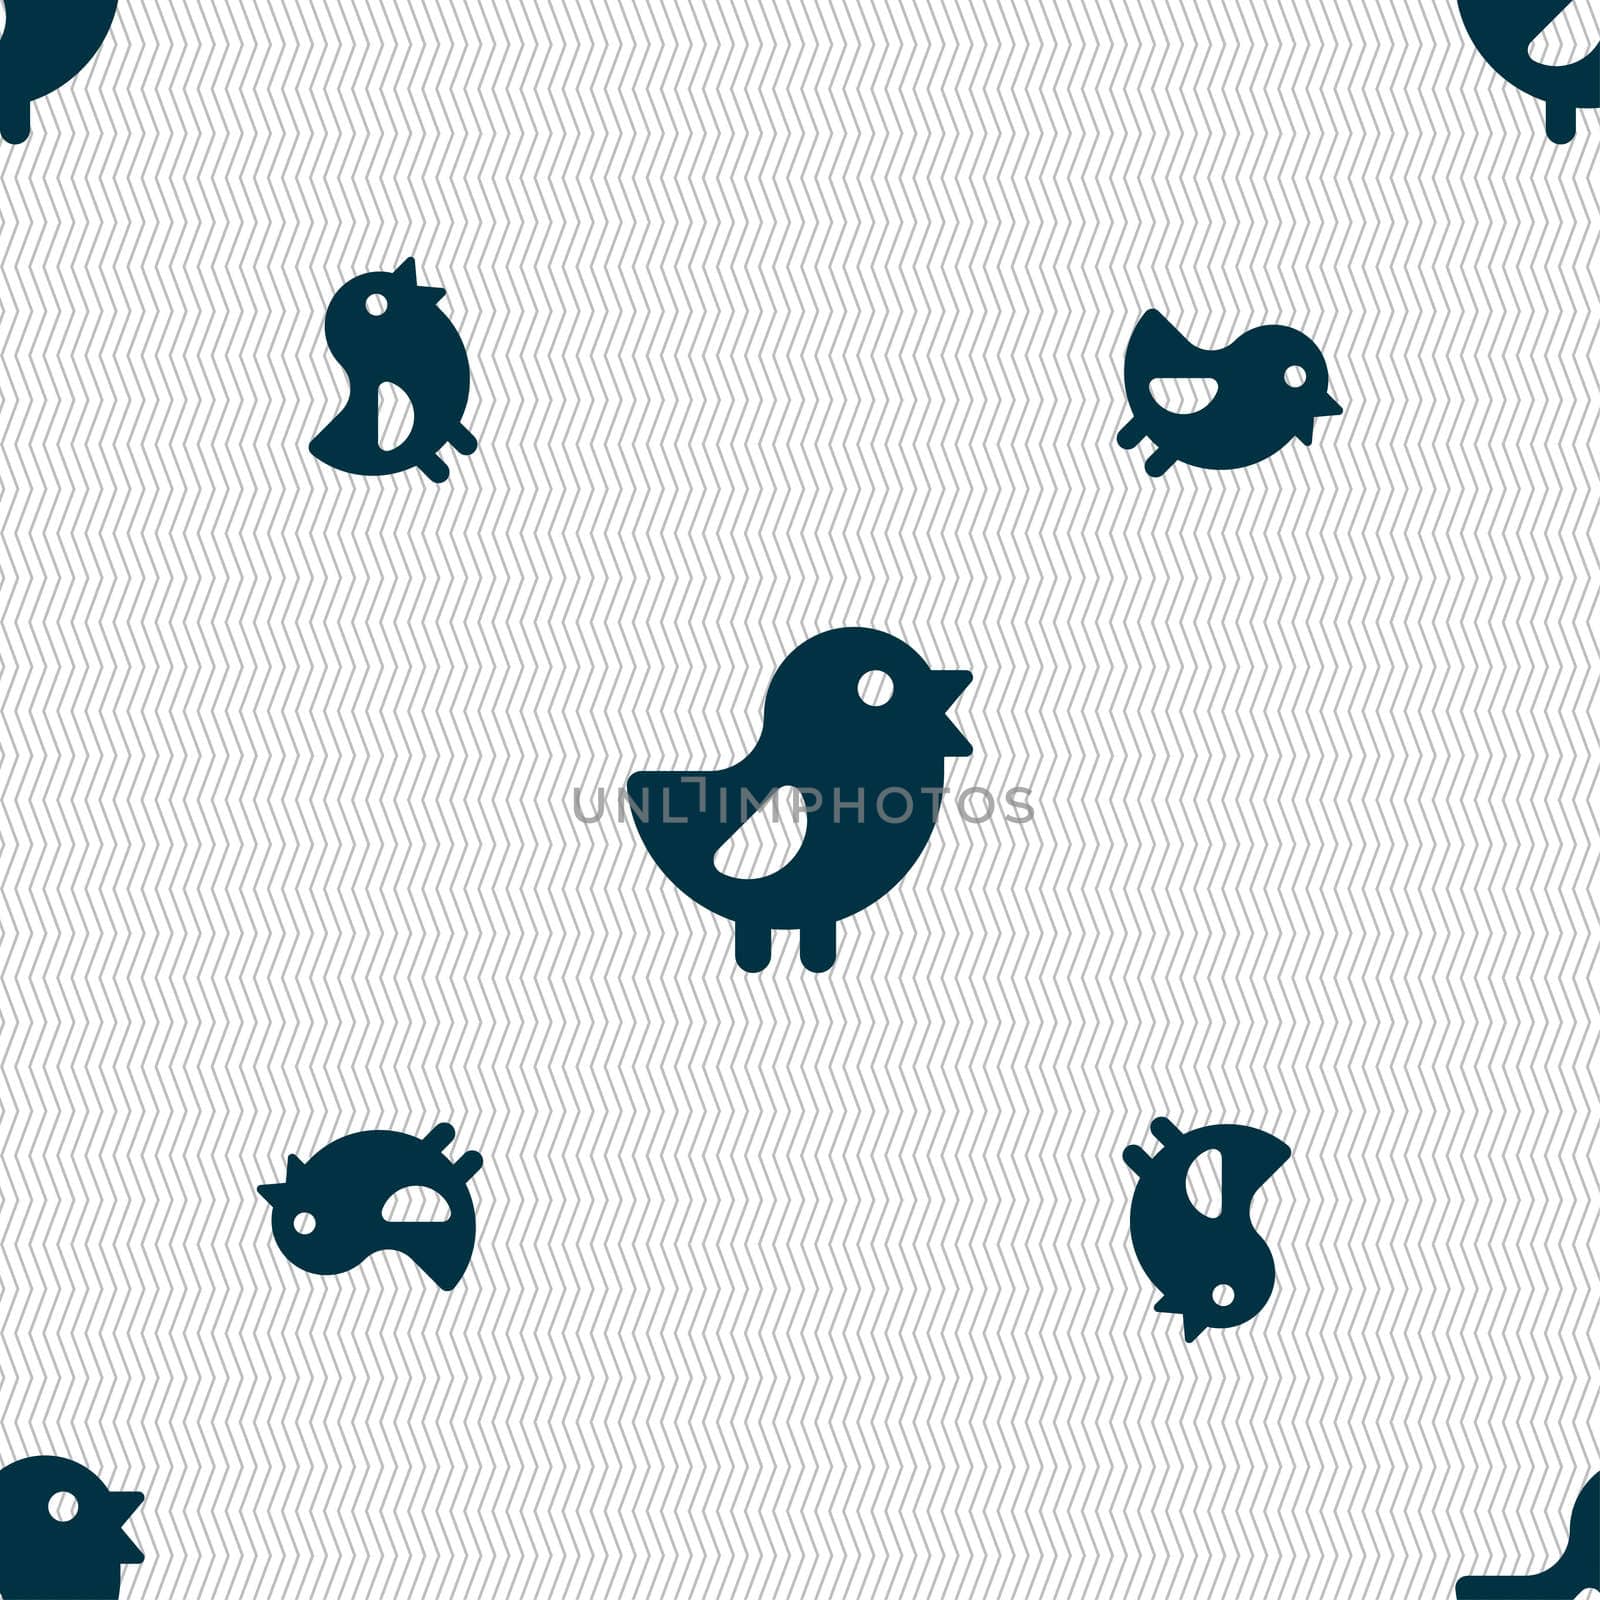 chicken, Bird icon sign. Seamless pattern with geometric texture. illustration